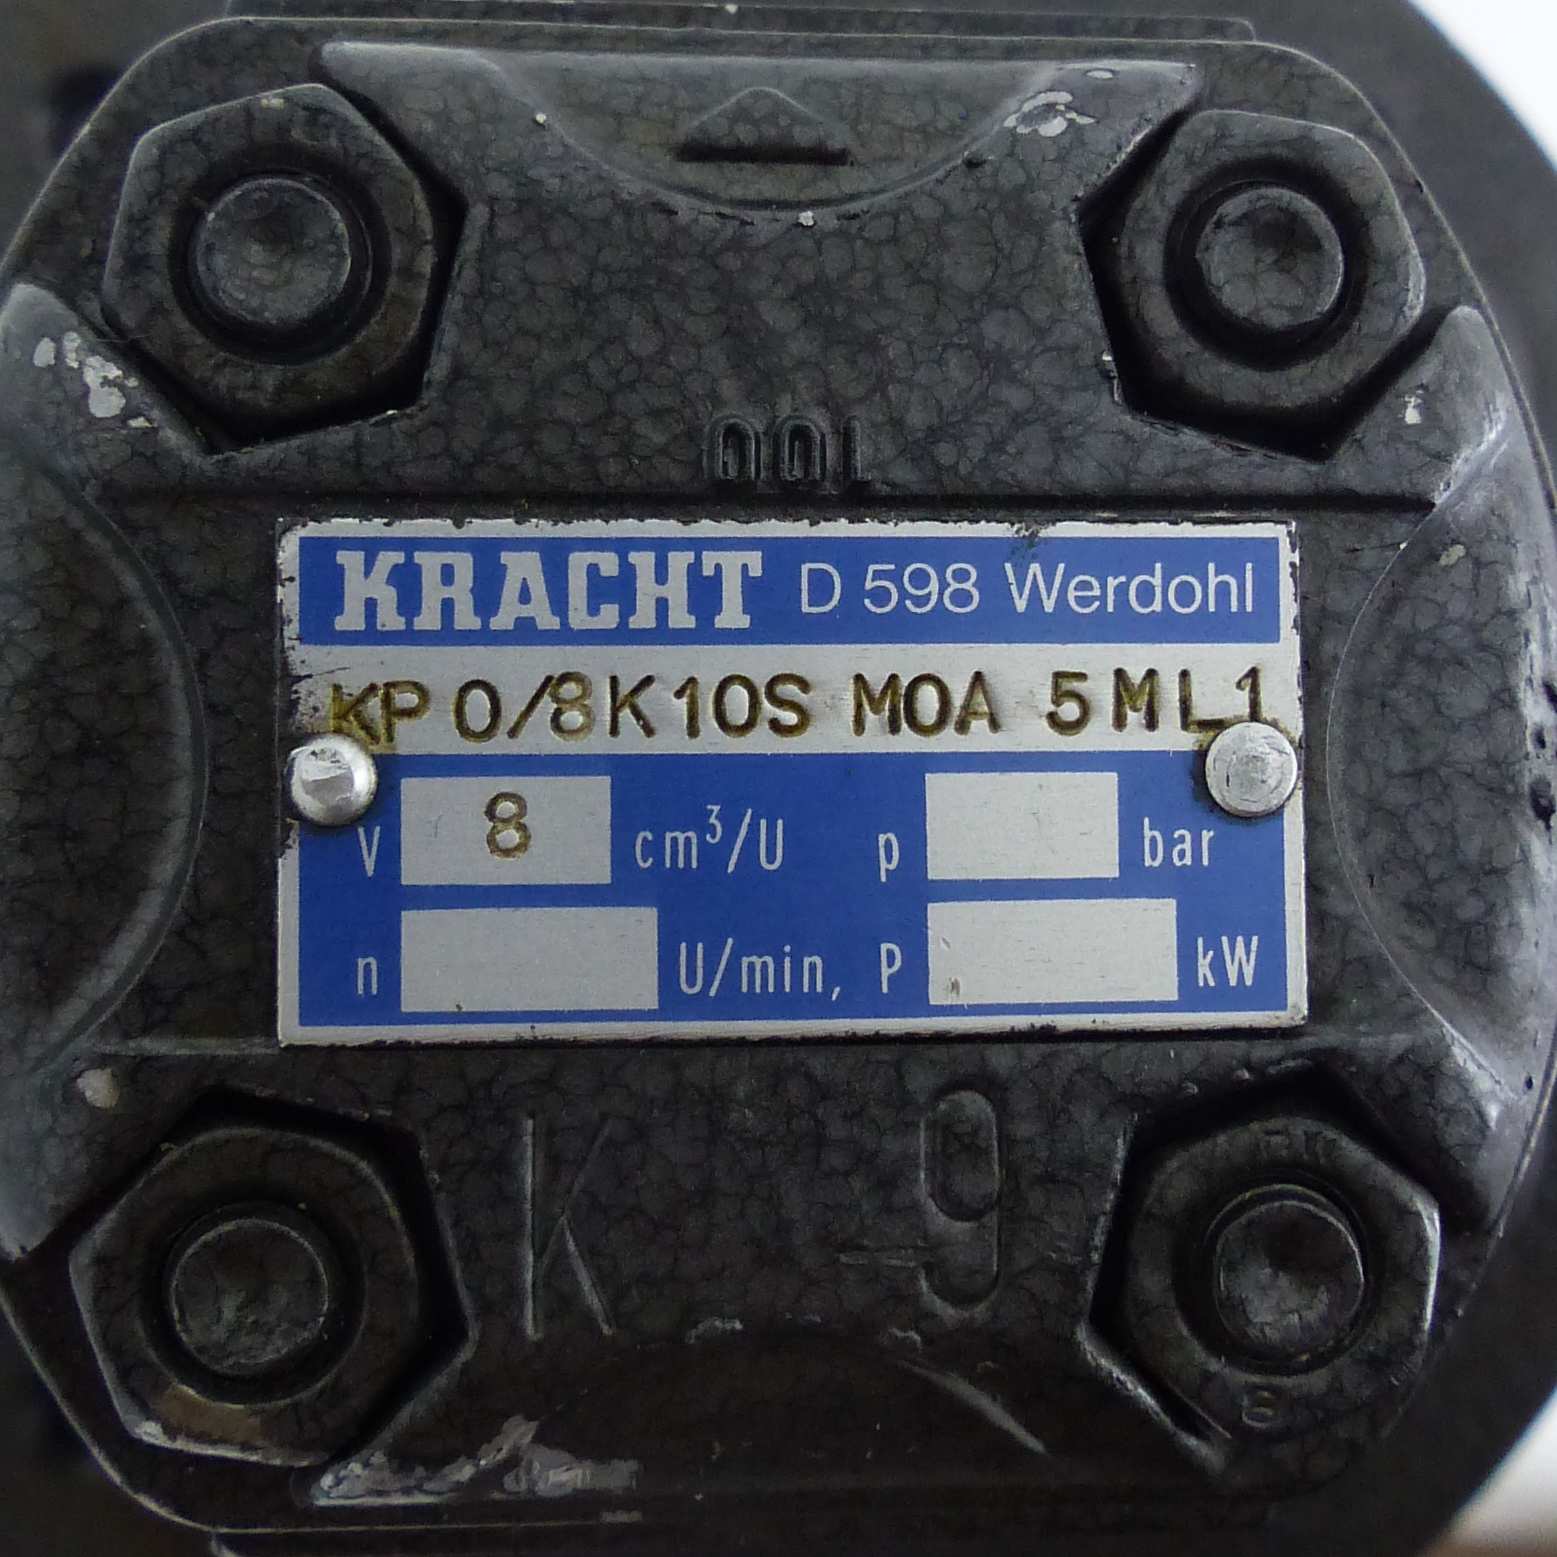 Hochdruck-Zahnradpumpe KP 0/8K10S M0A 5ML1 